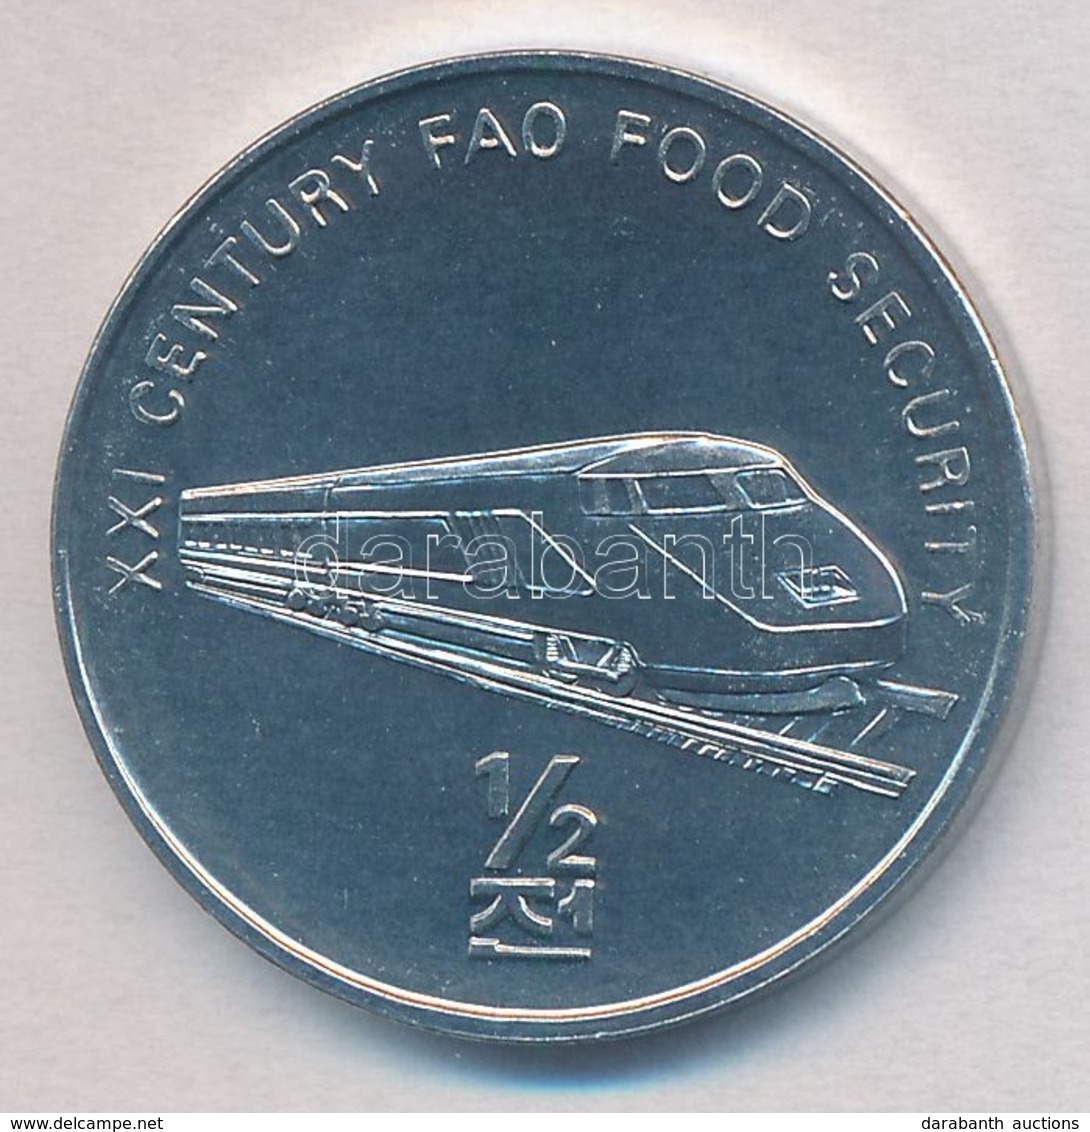 Észak-Korea 2002. 1/2c Al 'FAO / Modern Vonat' T:1
North Korea 2002. 1/2 Chon Al 'FAO / Modern Train' C:UNC
Krause KM#19 - Unclassified